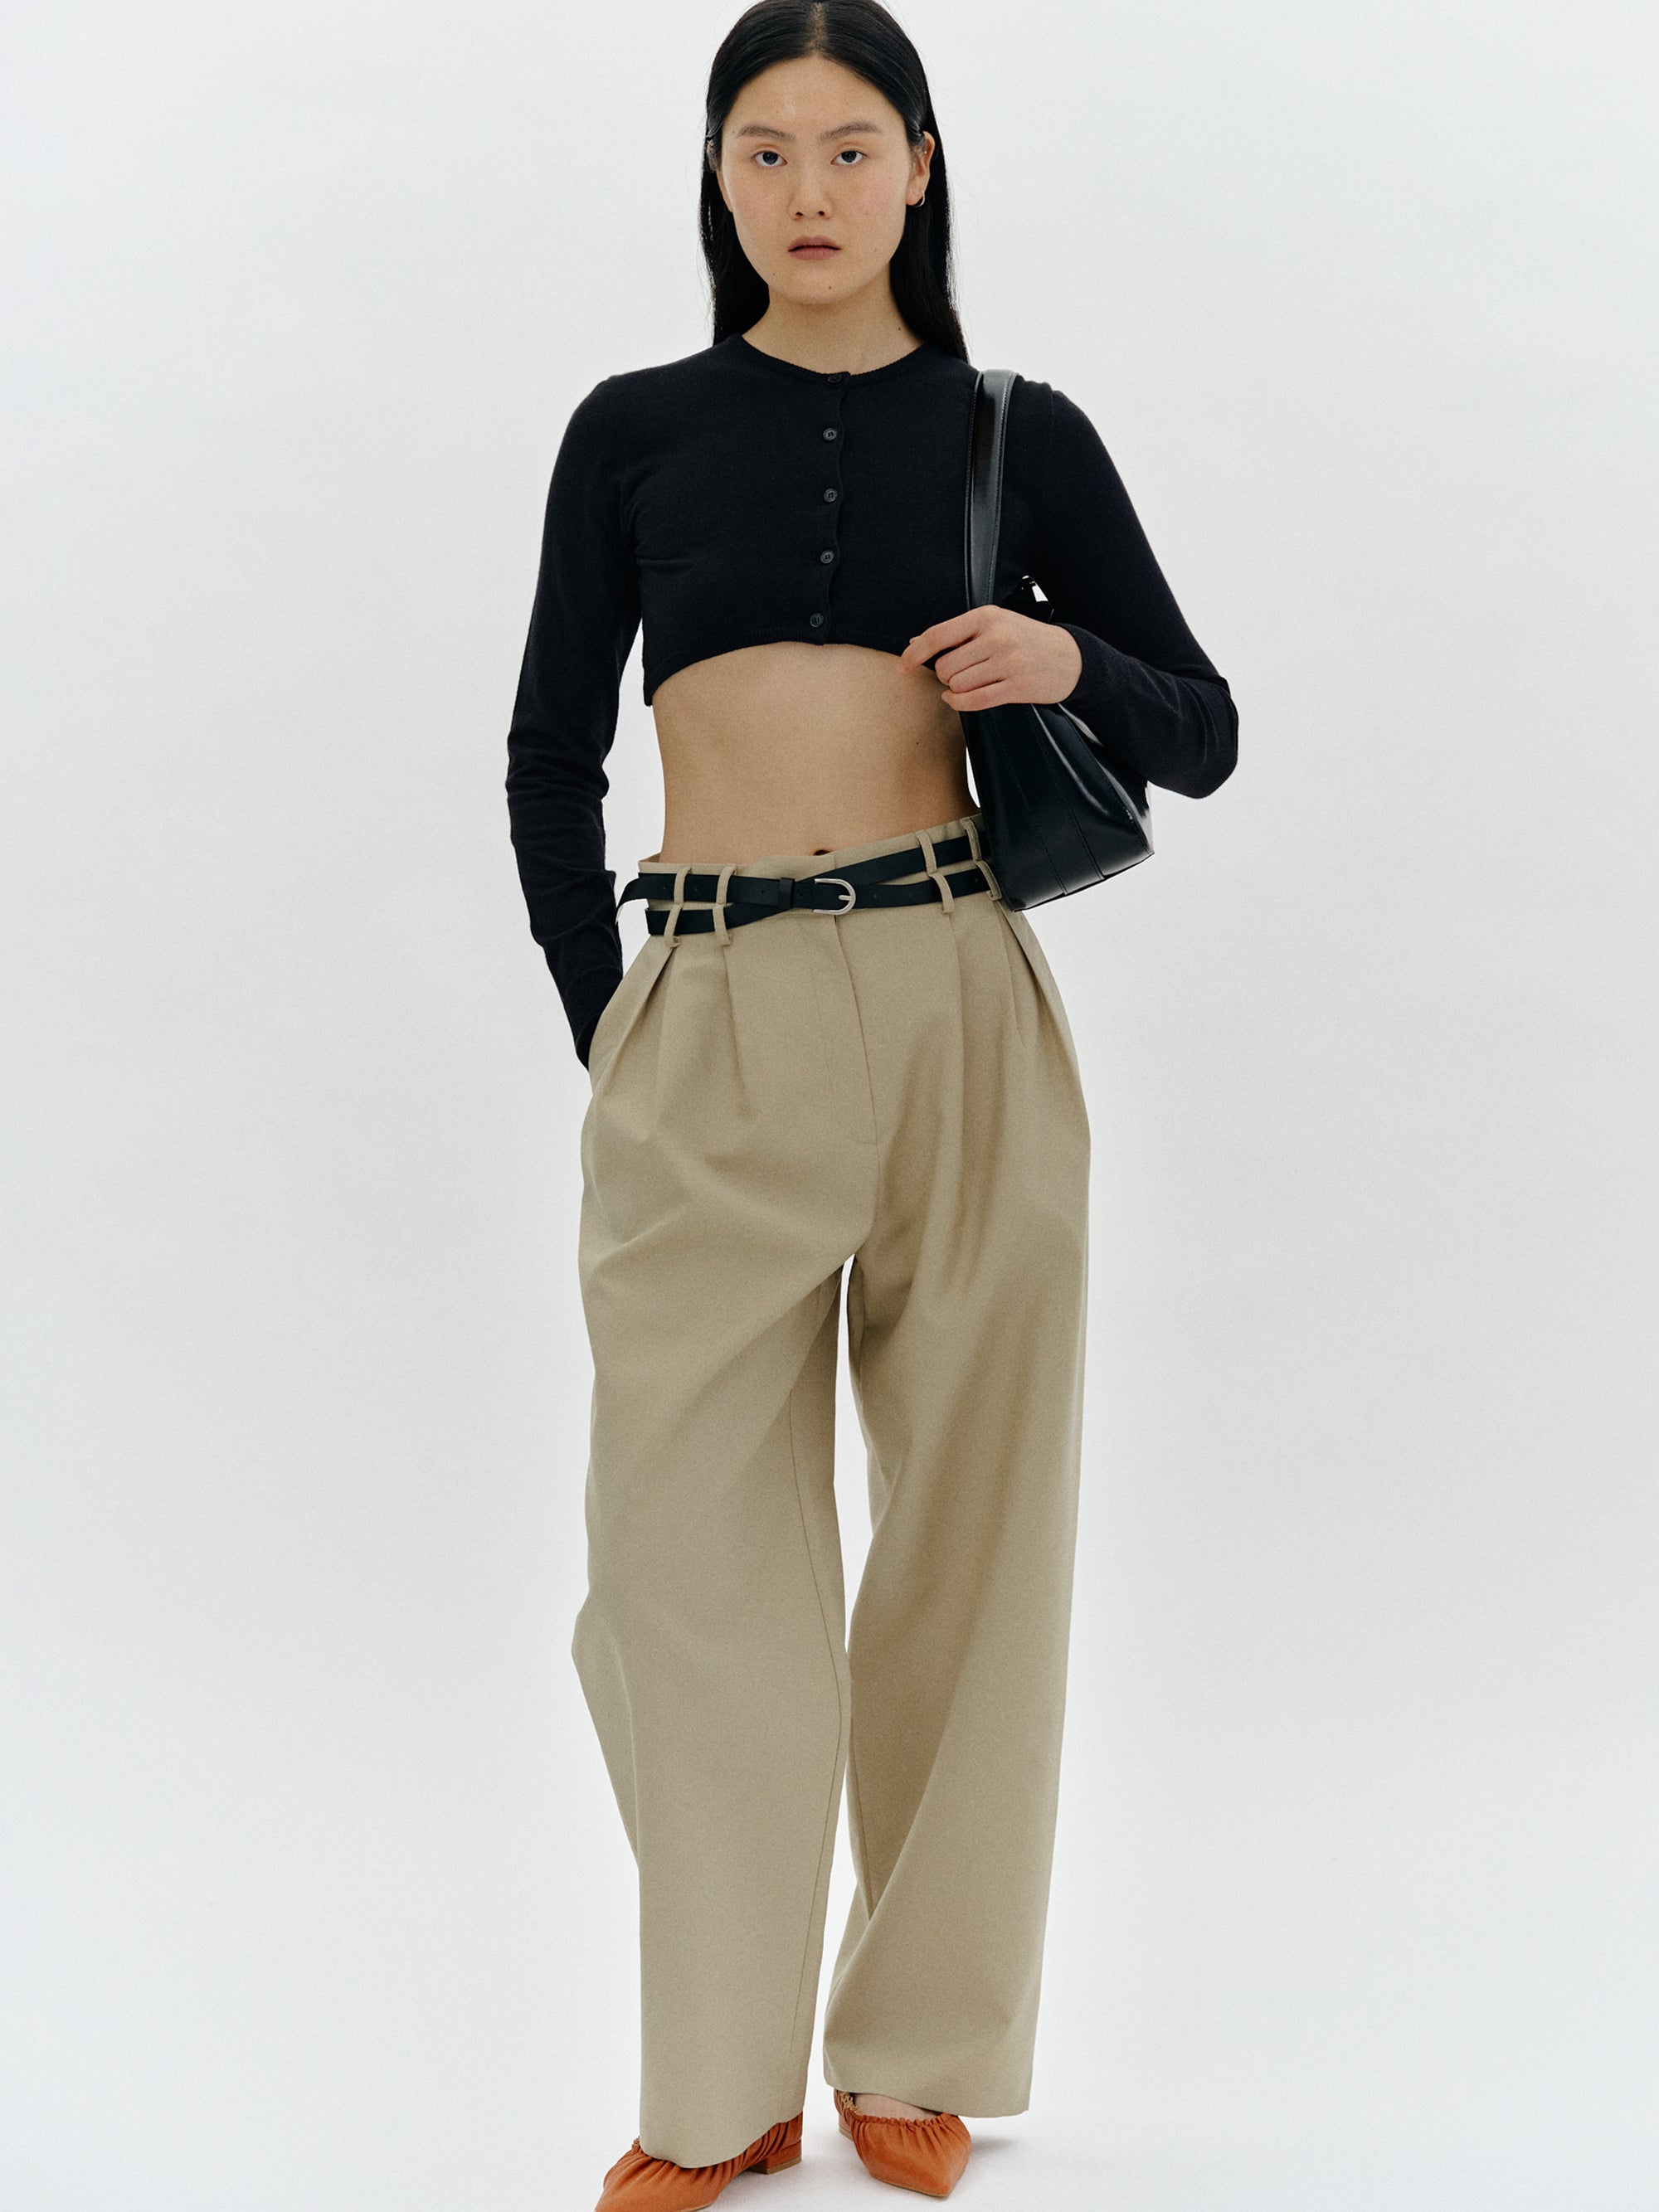 Rangel Womens Belt Loop Mid Rise Straight Leg Dress Pants Black Size S -  Shop Linda's Stuff